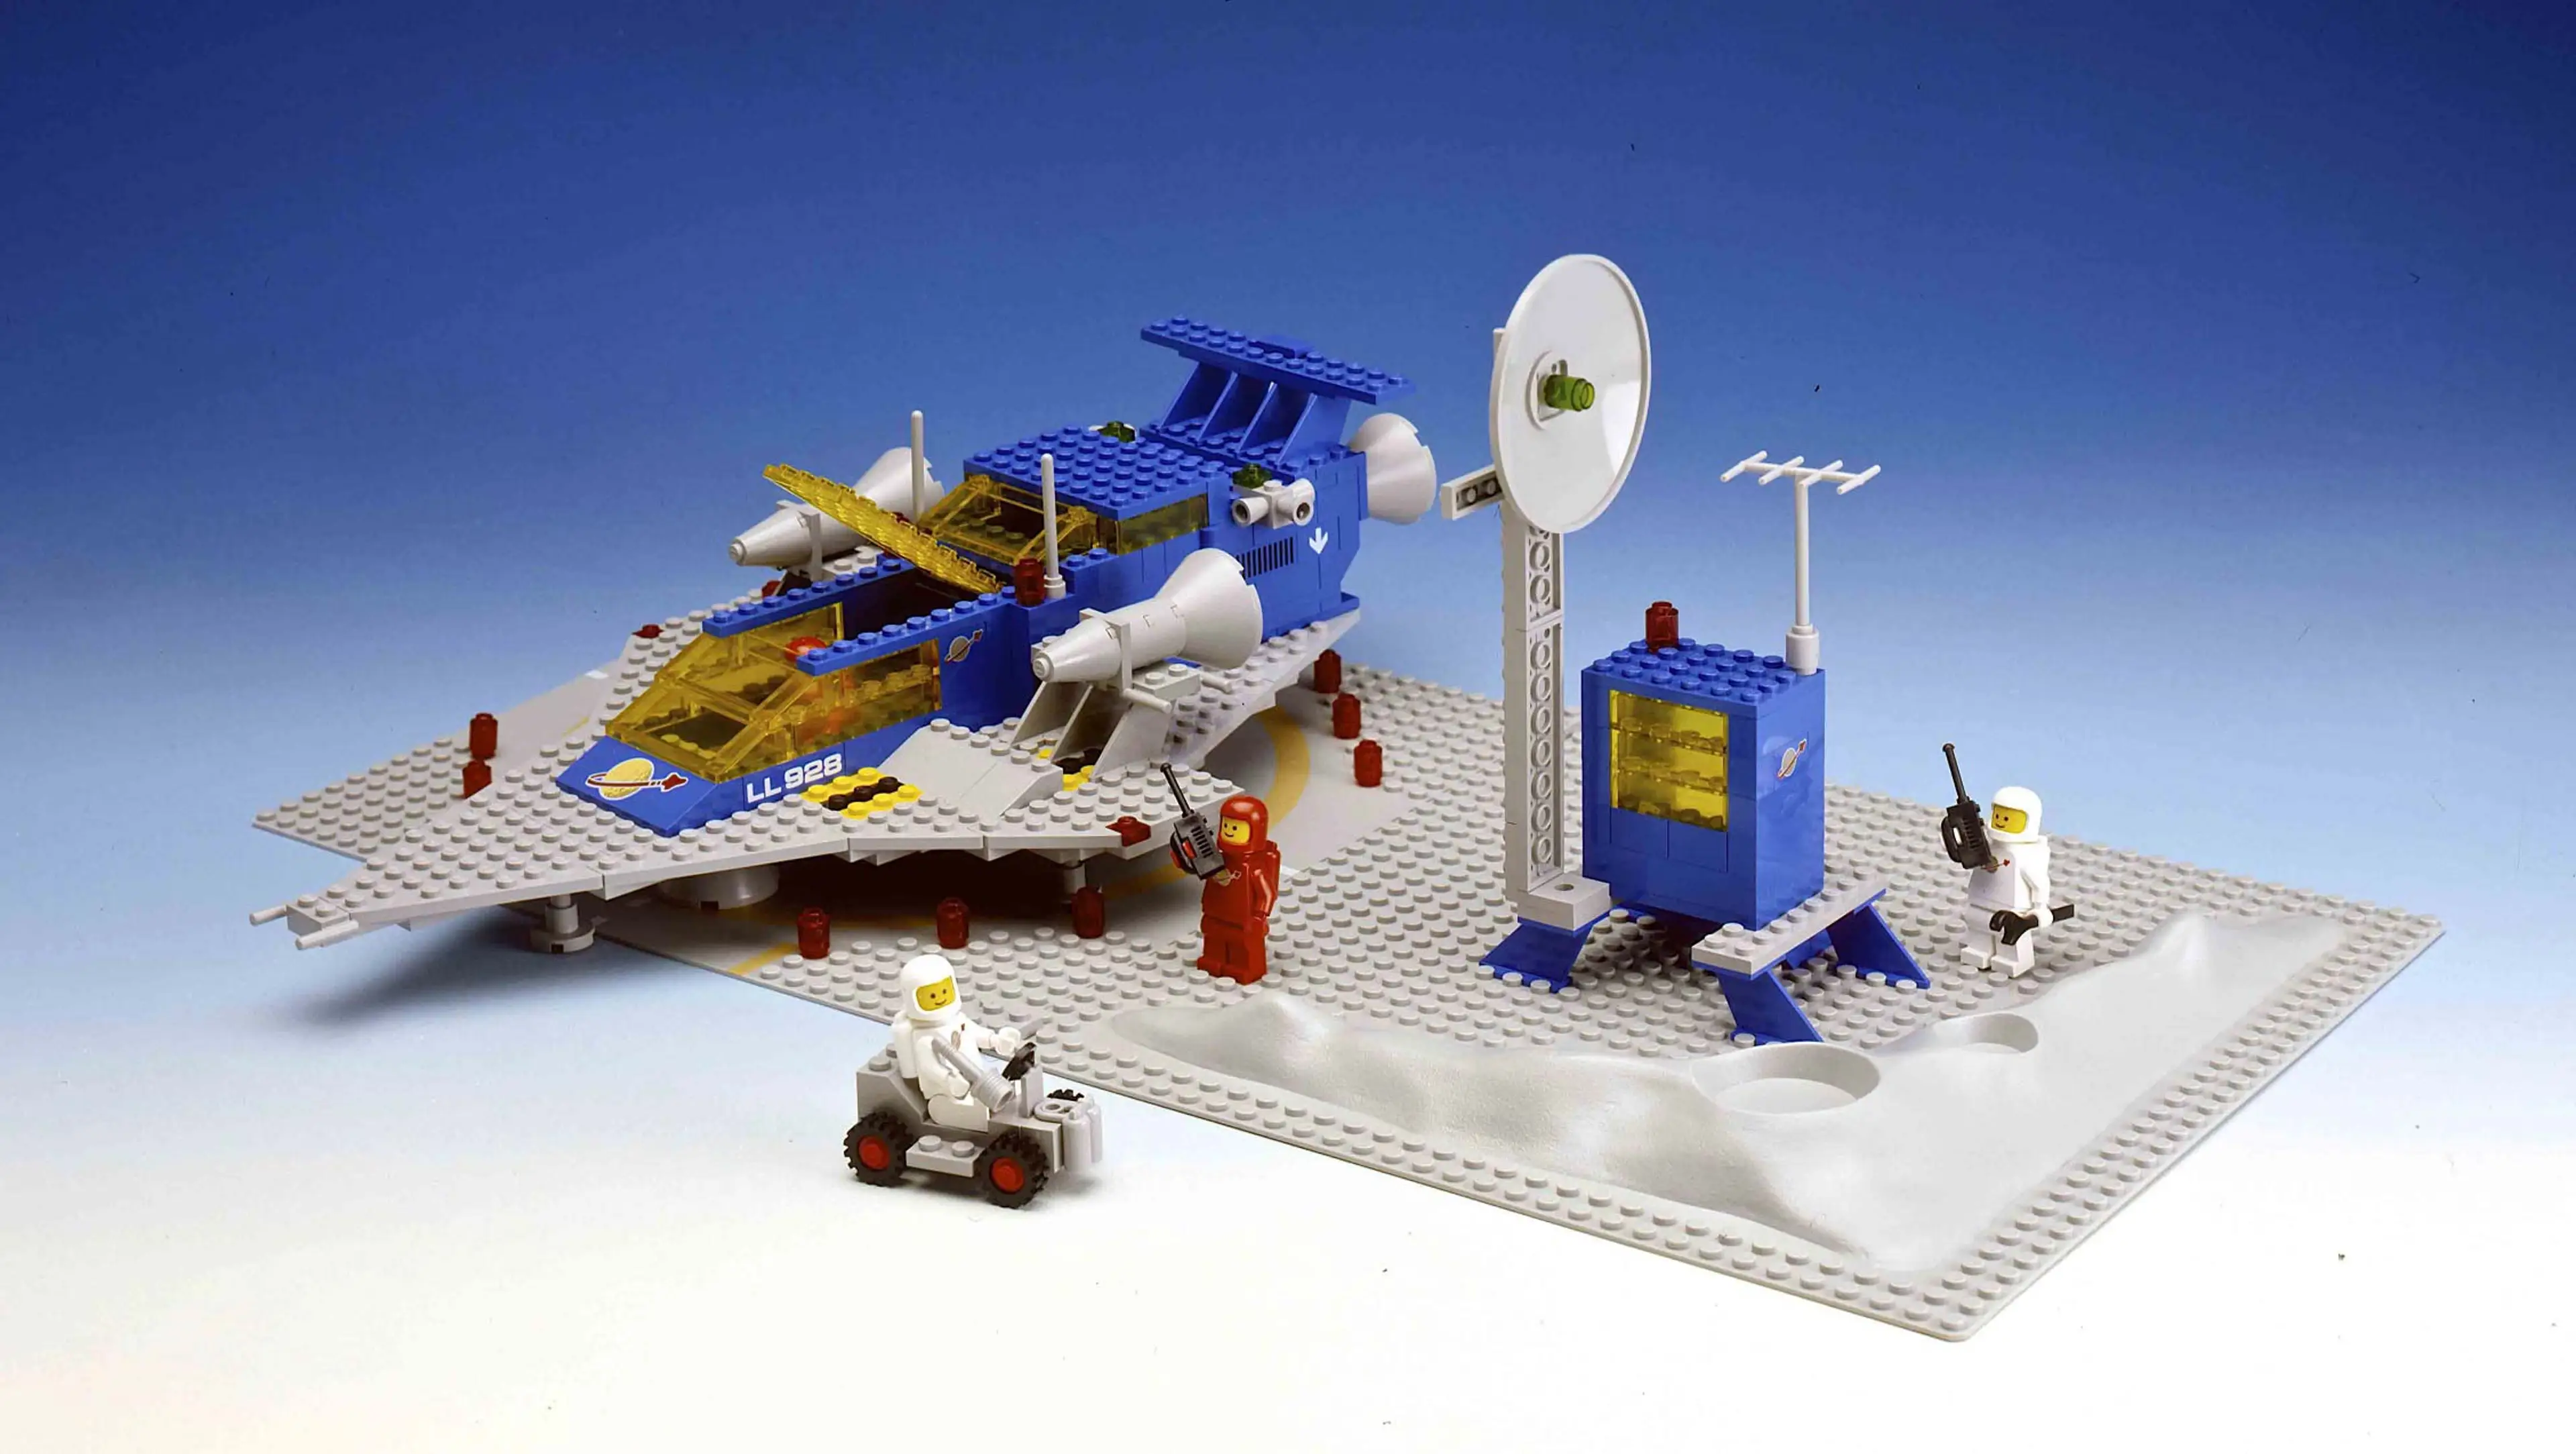 LEGO Space model - Galaxy Explorer